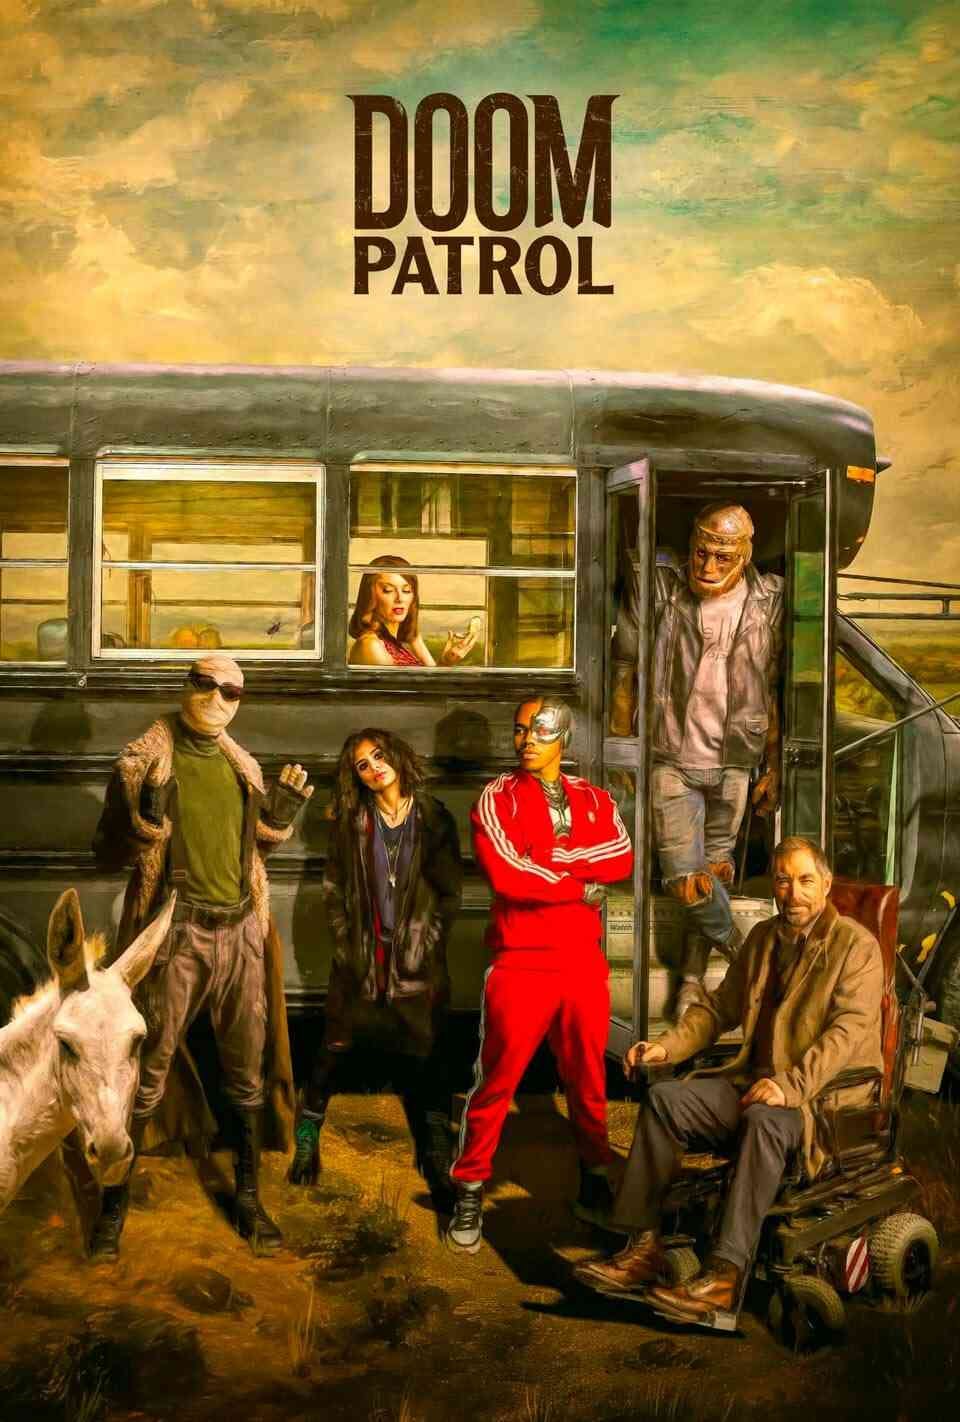 Read Doom Patrol screenplay (poster)